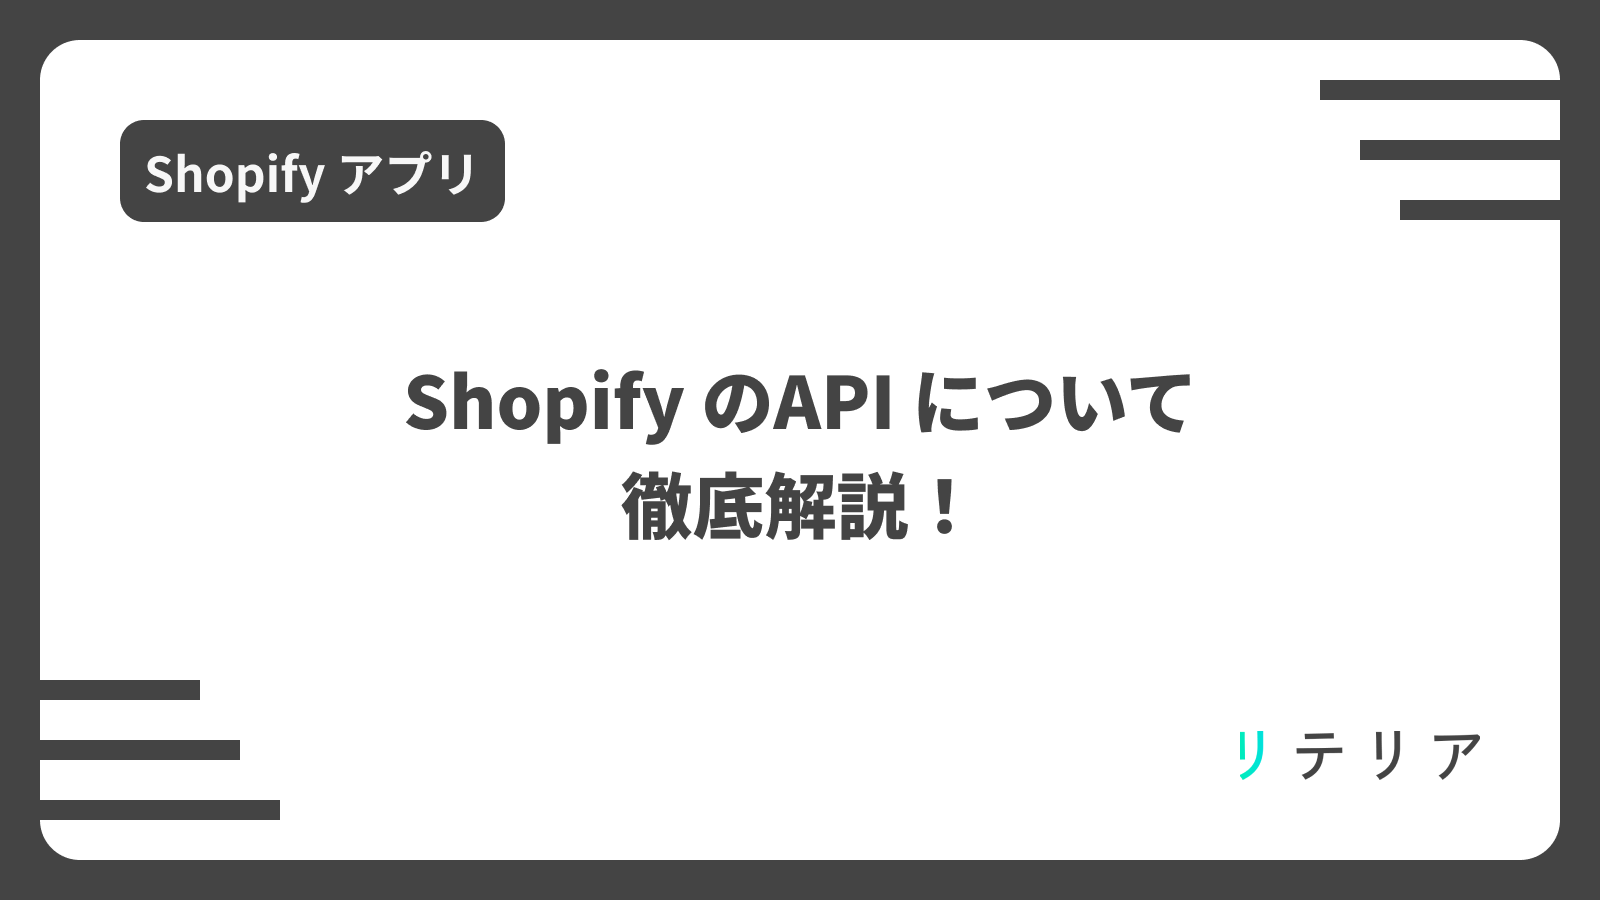 Shopify API の使い方について徹底解説